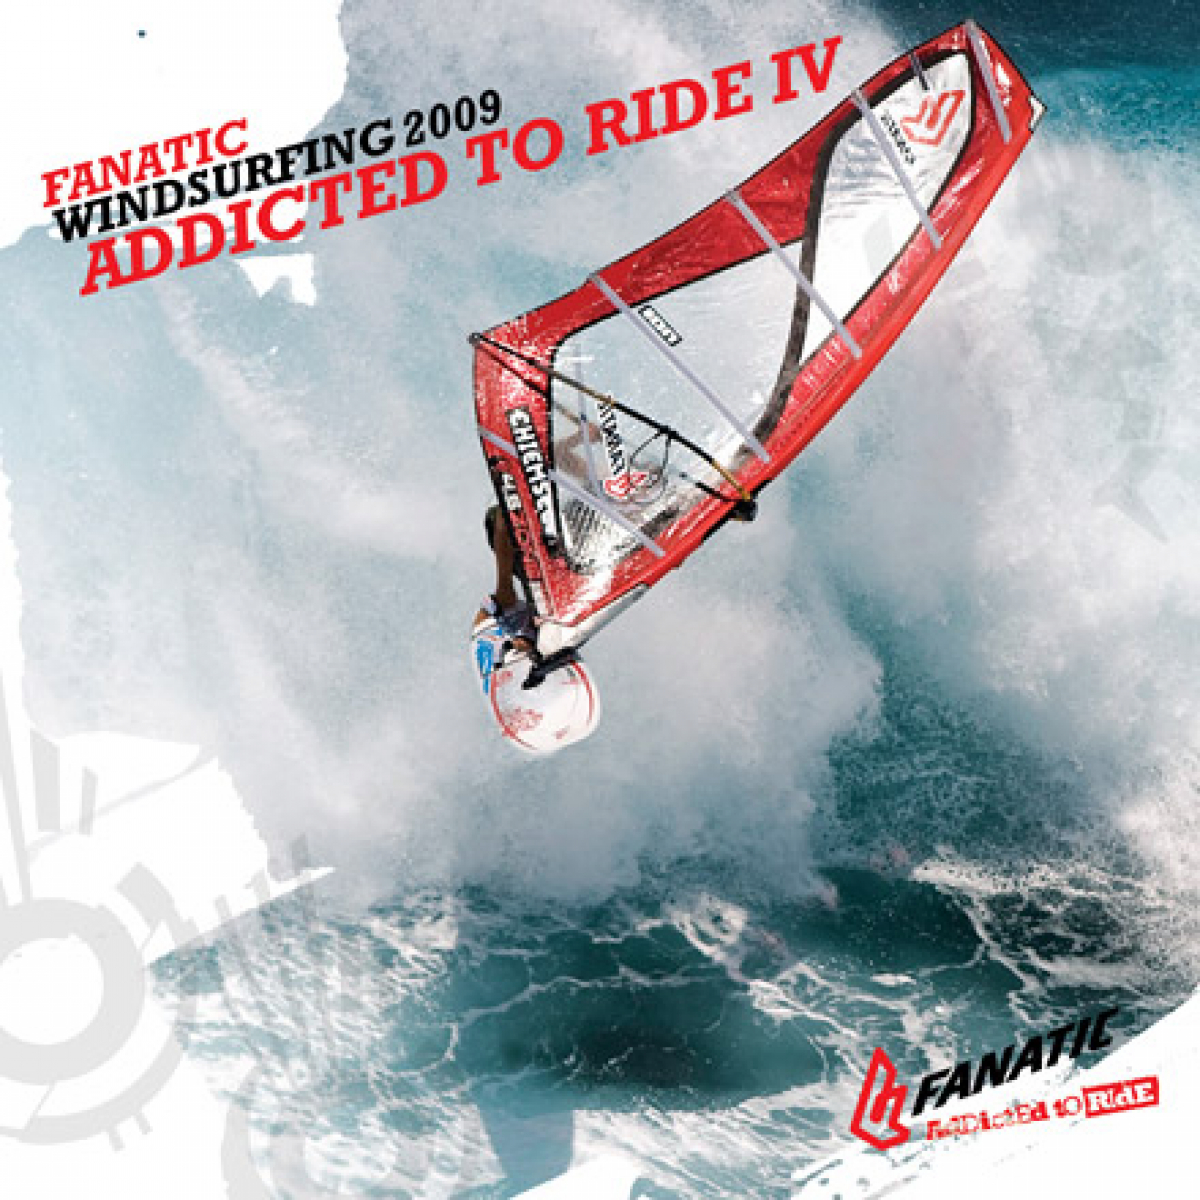 Addicted to Ride 4 - die neue Fanatic DVD